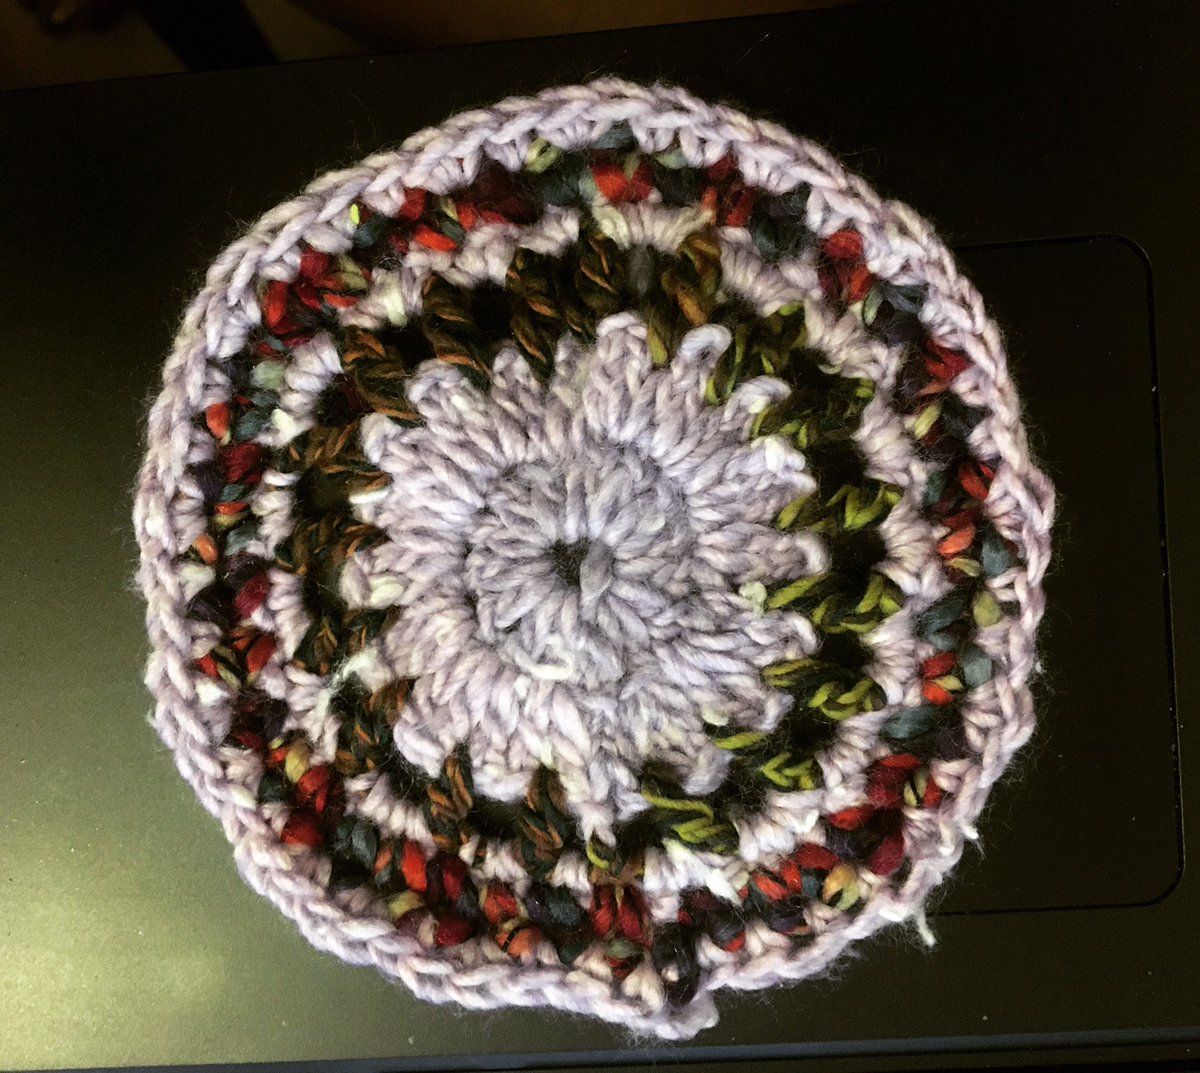 A poorly #TableCoaster 😂😂 #Crochet #yarnaddict #yarnspirations #yarnaddiction #yarncolours #knittersofinstagram #instacrochet #crochetlove #crocheteers 
#shareyourcrochet #knitspiration #knitting_inspiration #woolweek